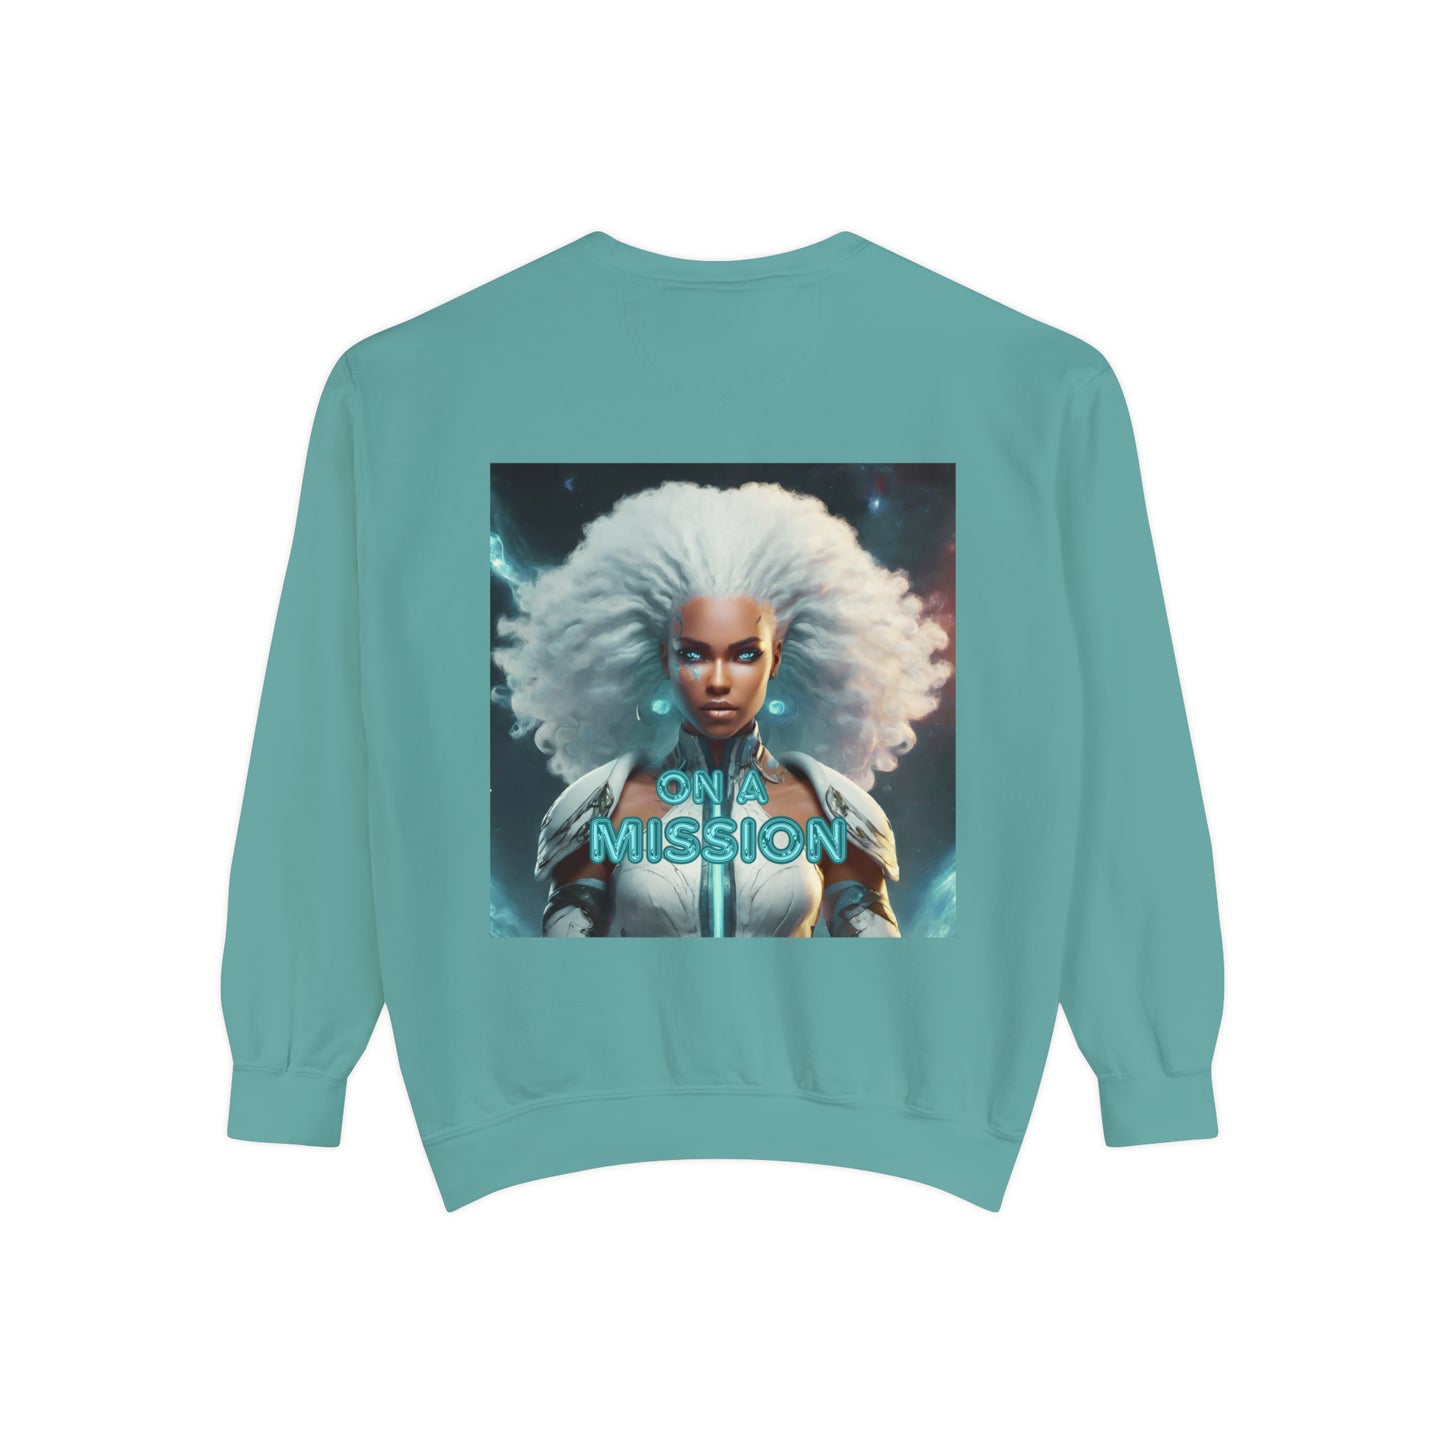 "Earth Angel on a Mission" Unisex Sweatshirt